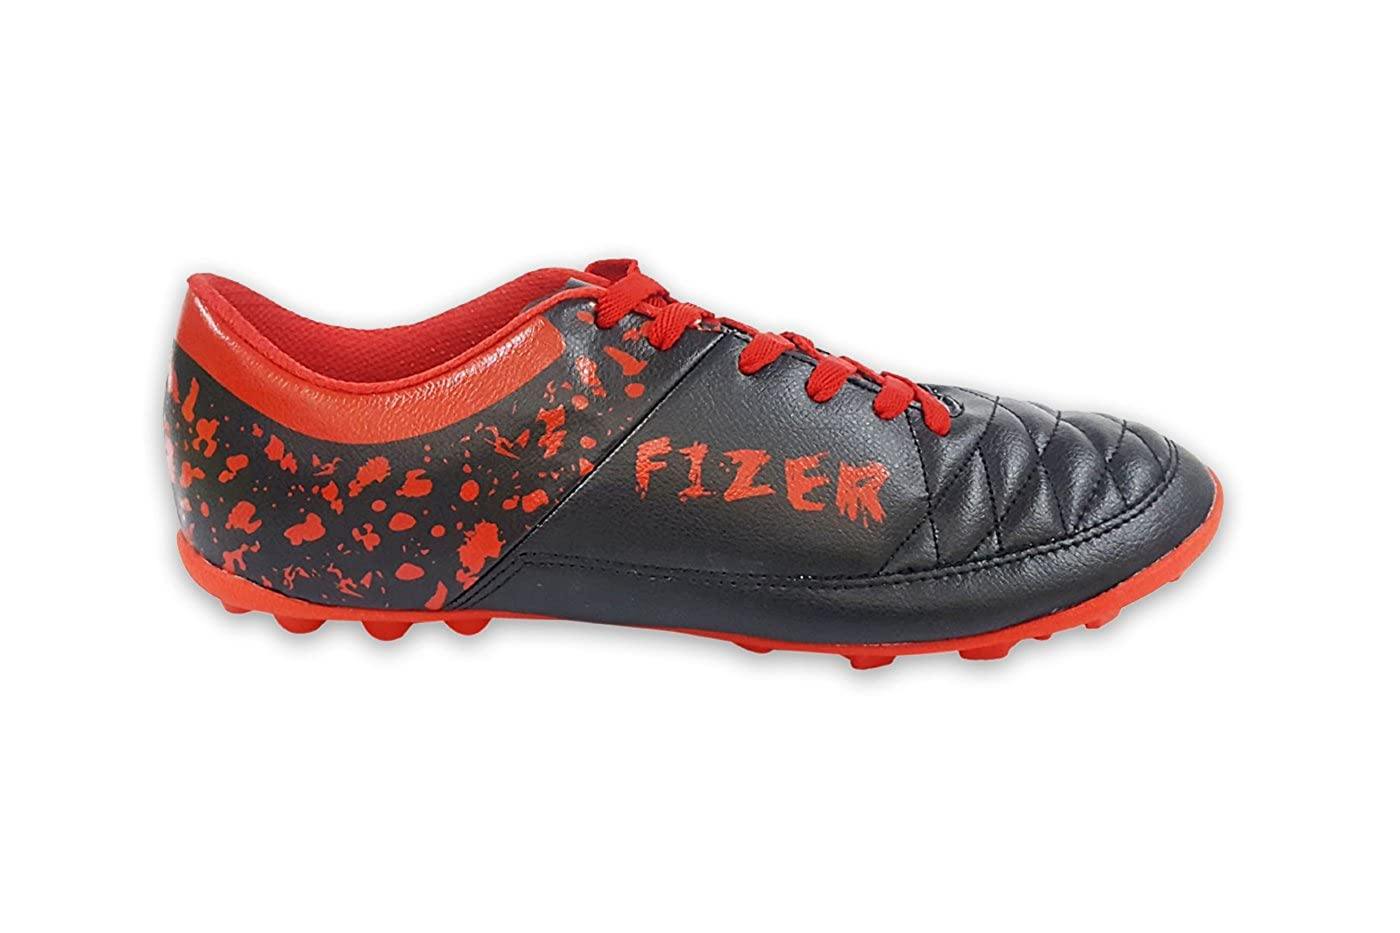 Vector X Fizer Football Shoes (Black-Red) - Best Price online Prokicksports.com